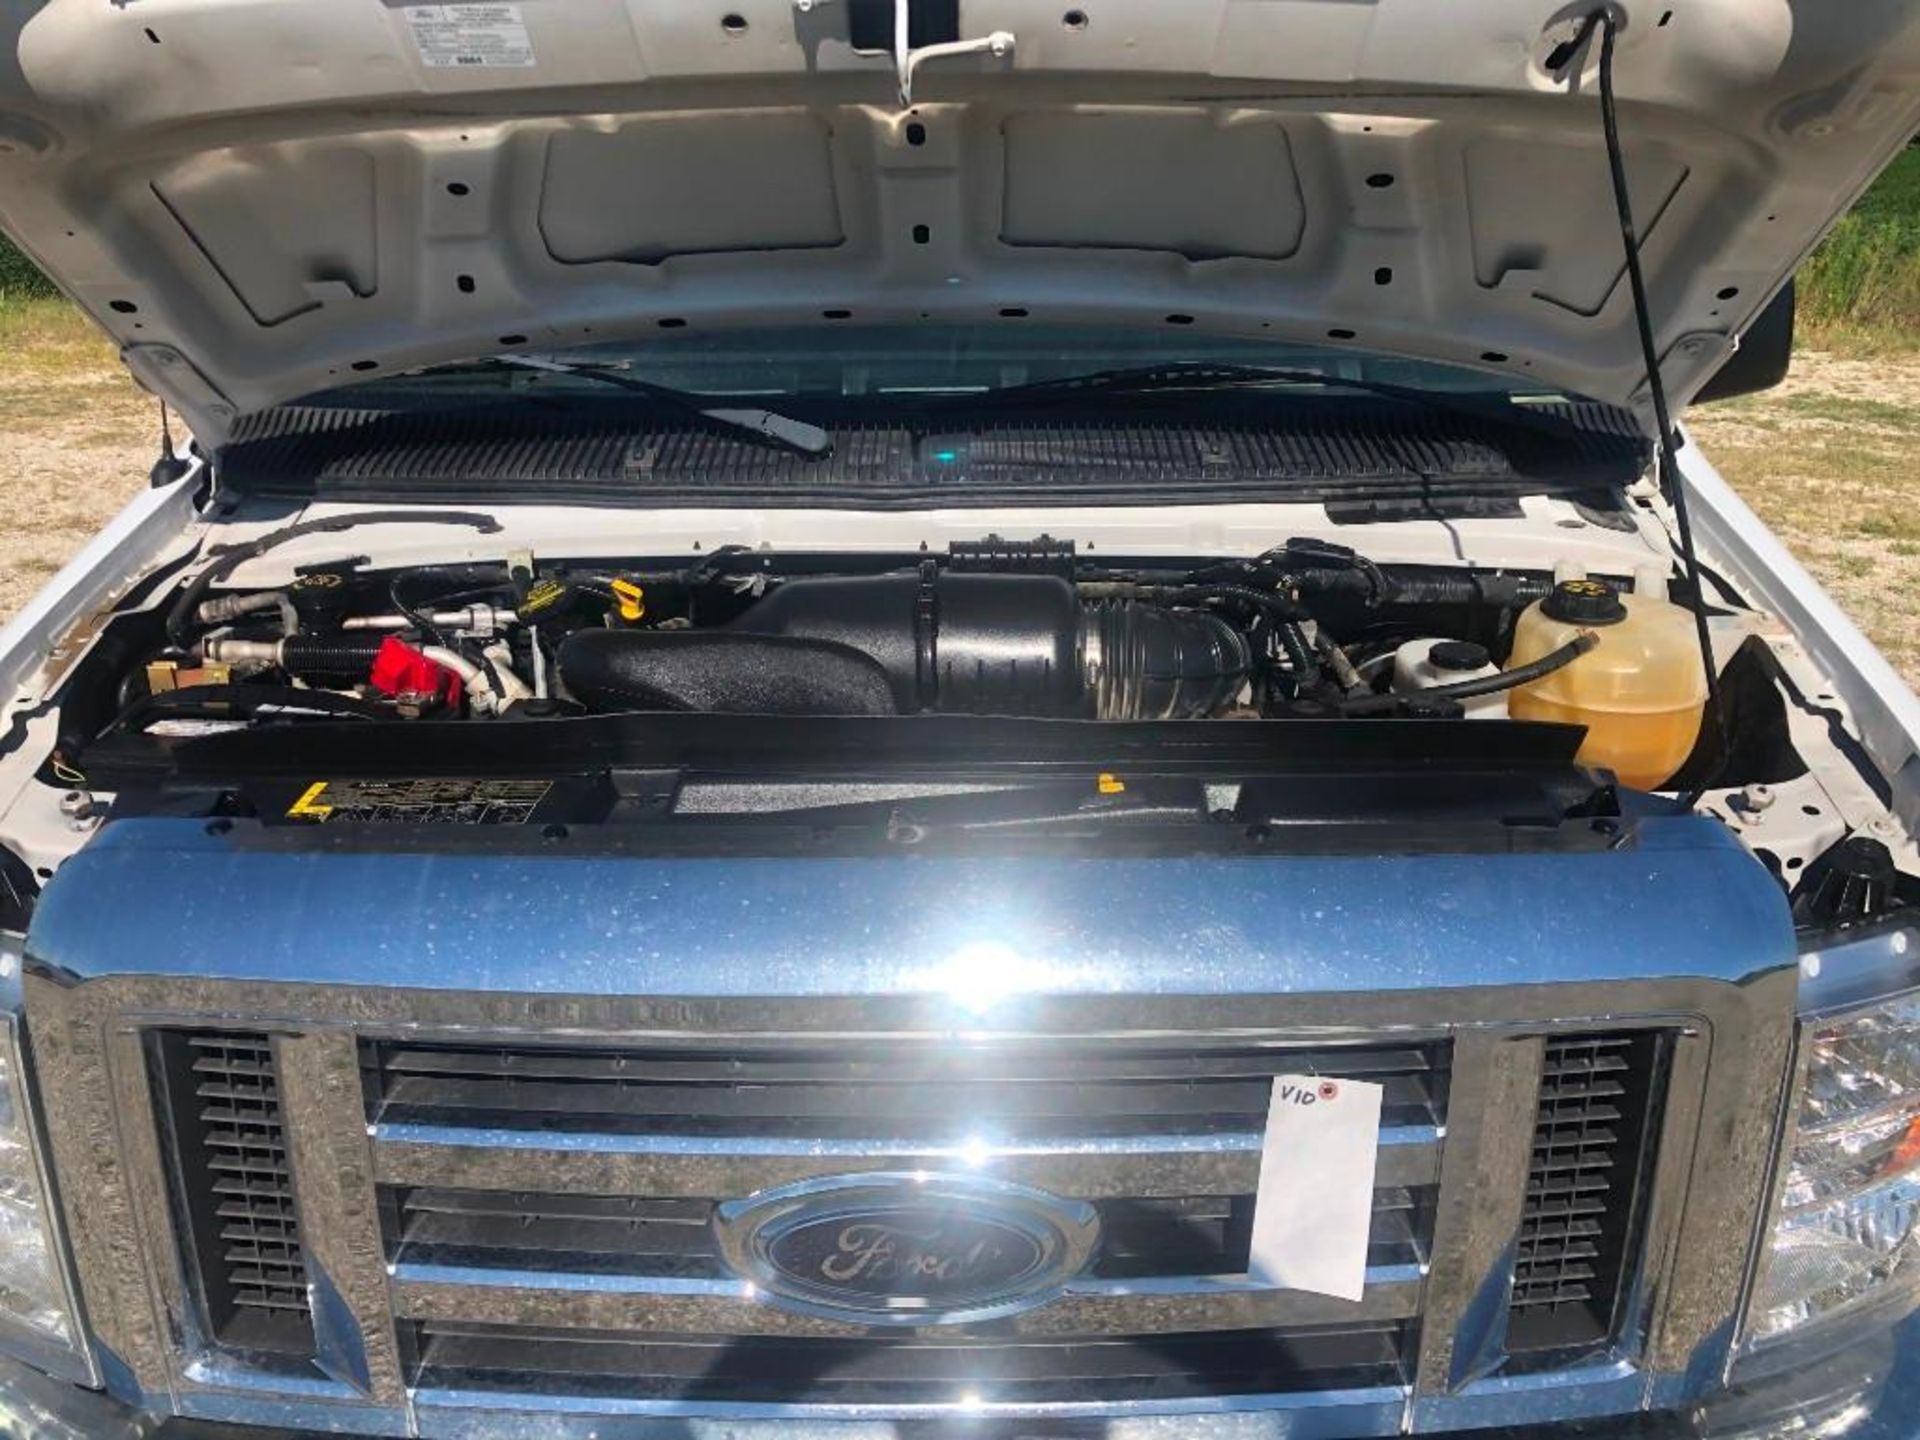 2013 Ford E3500 XLT Super Duty Van, VIN #1FBSS3BL7DDA00317, 222272 Miles, Catalytic Converter has - Image 10 of 21